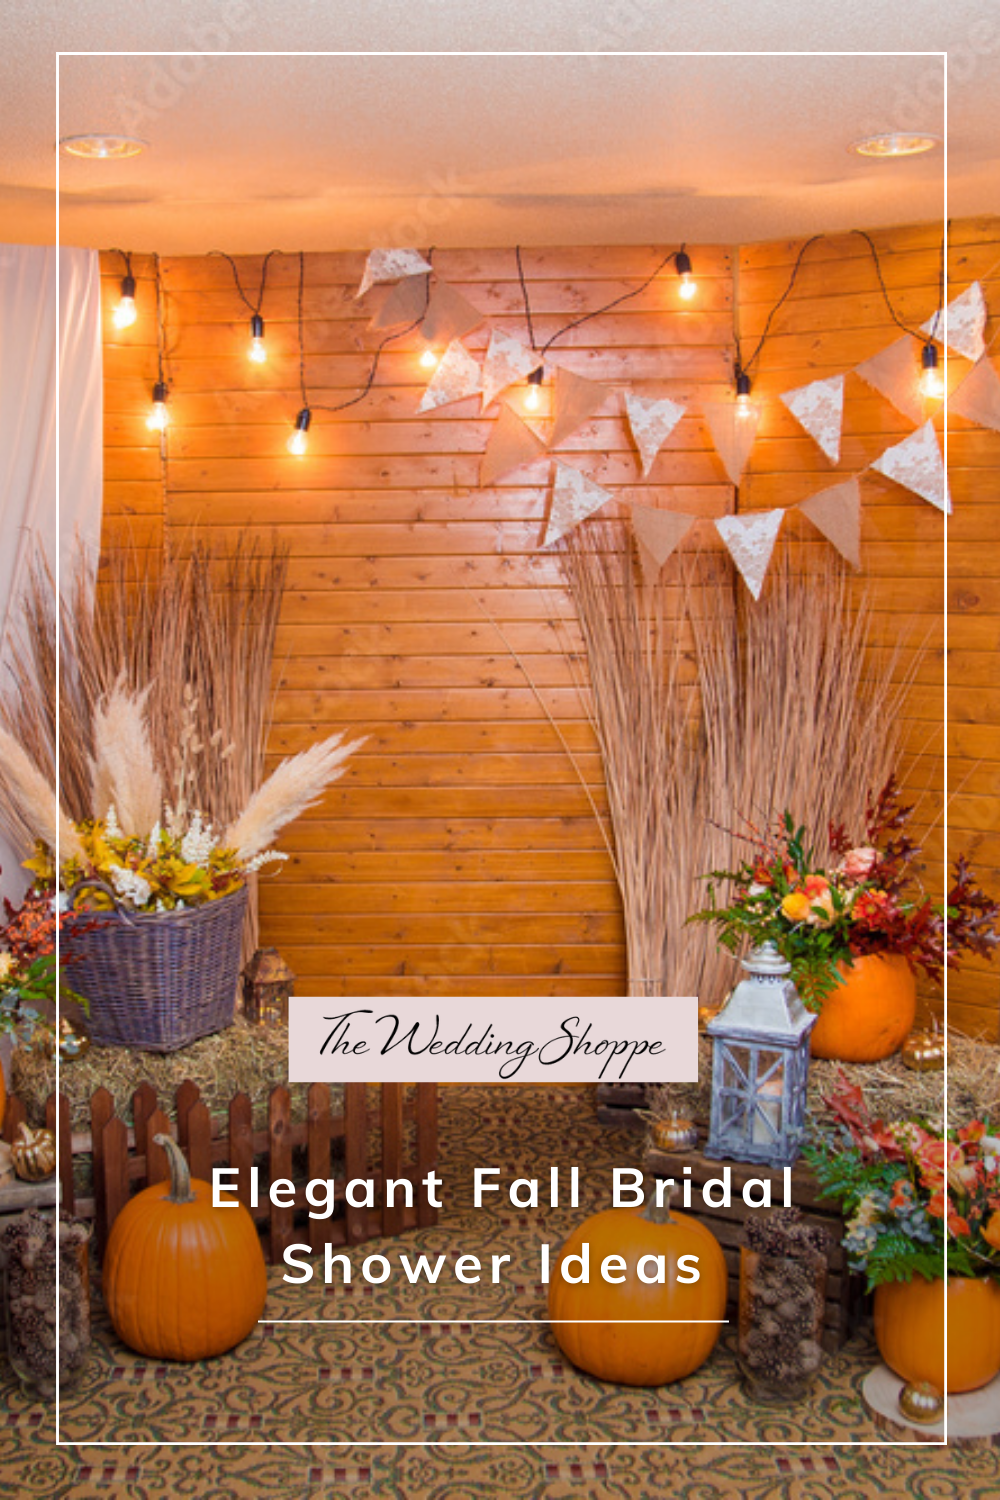 blog post graphic for "Elegant Fall Bridal Shower Ideas"